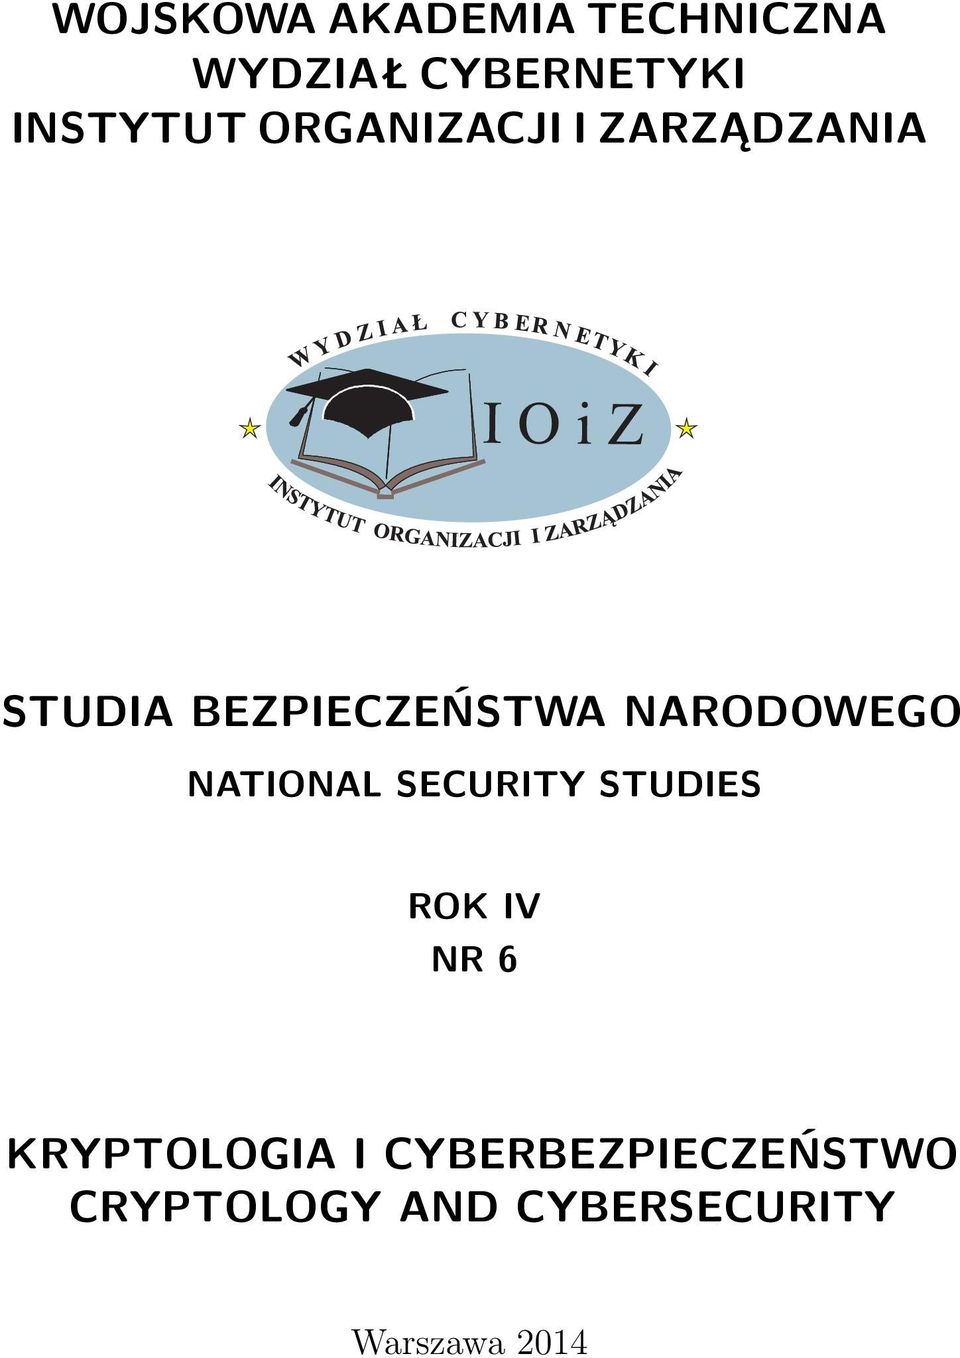 NARODOWEGO NATIONAL SECURITY STUDIES ROK IV NR 6